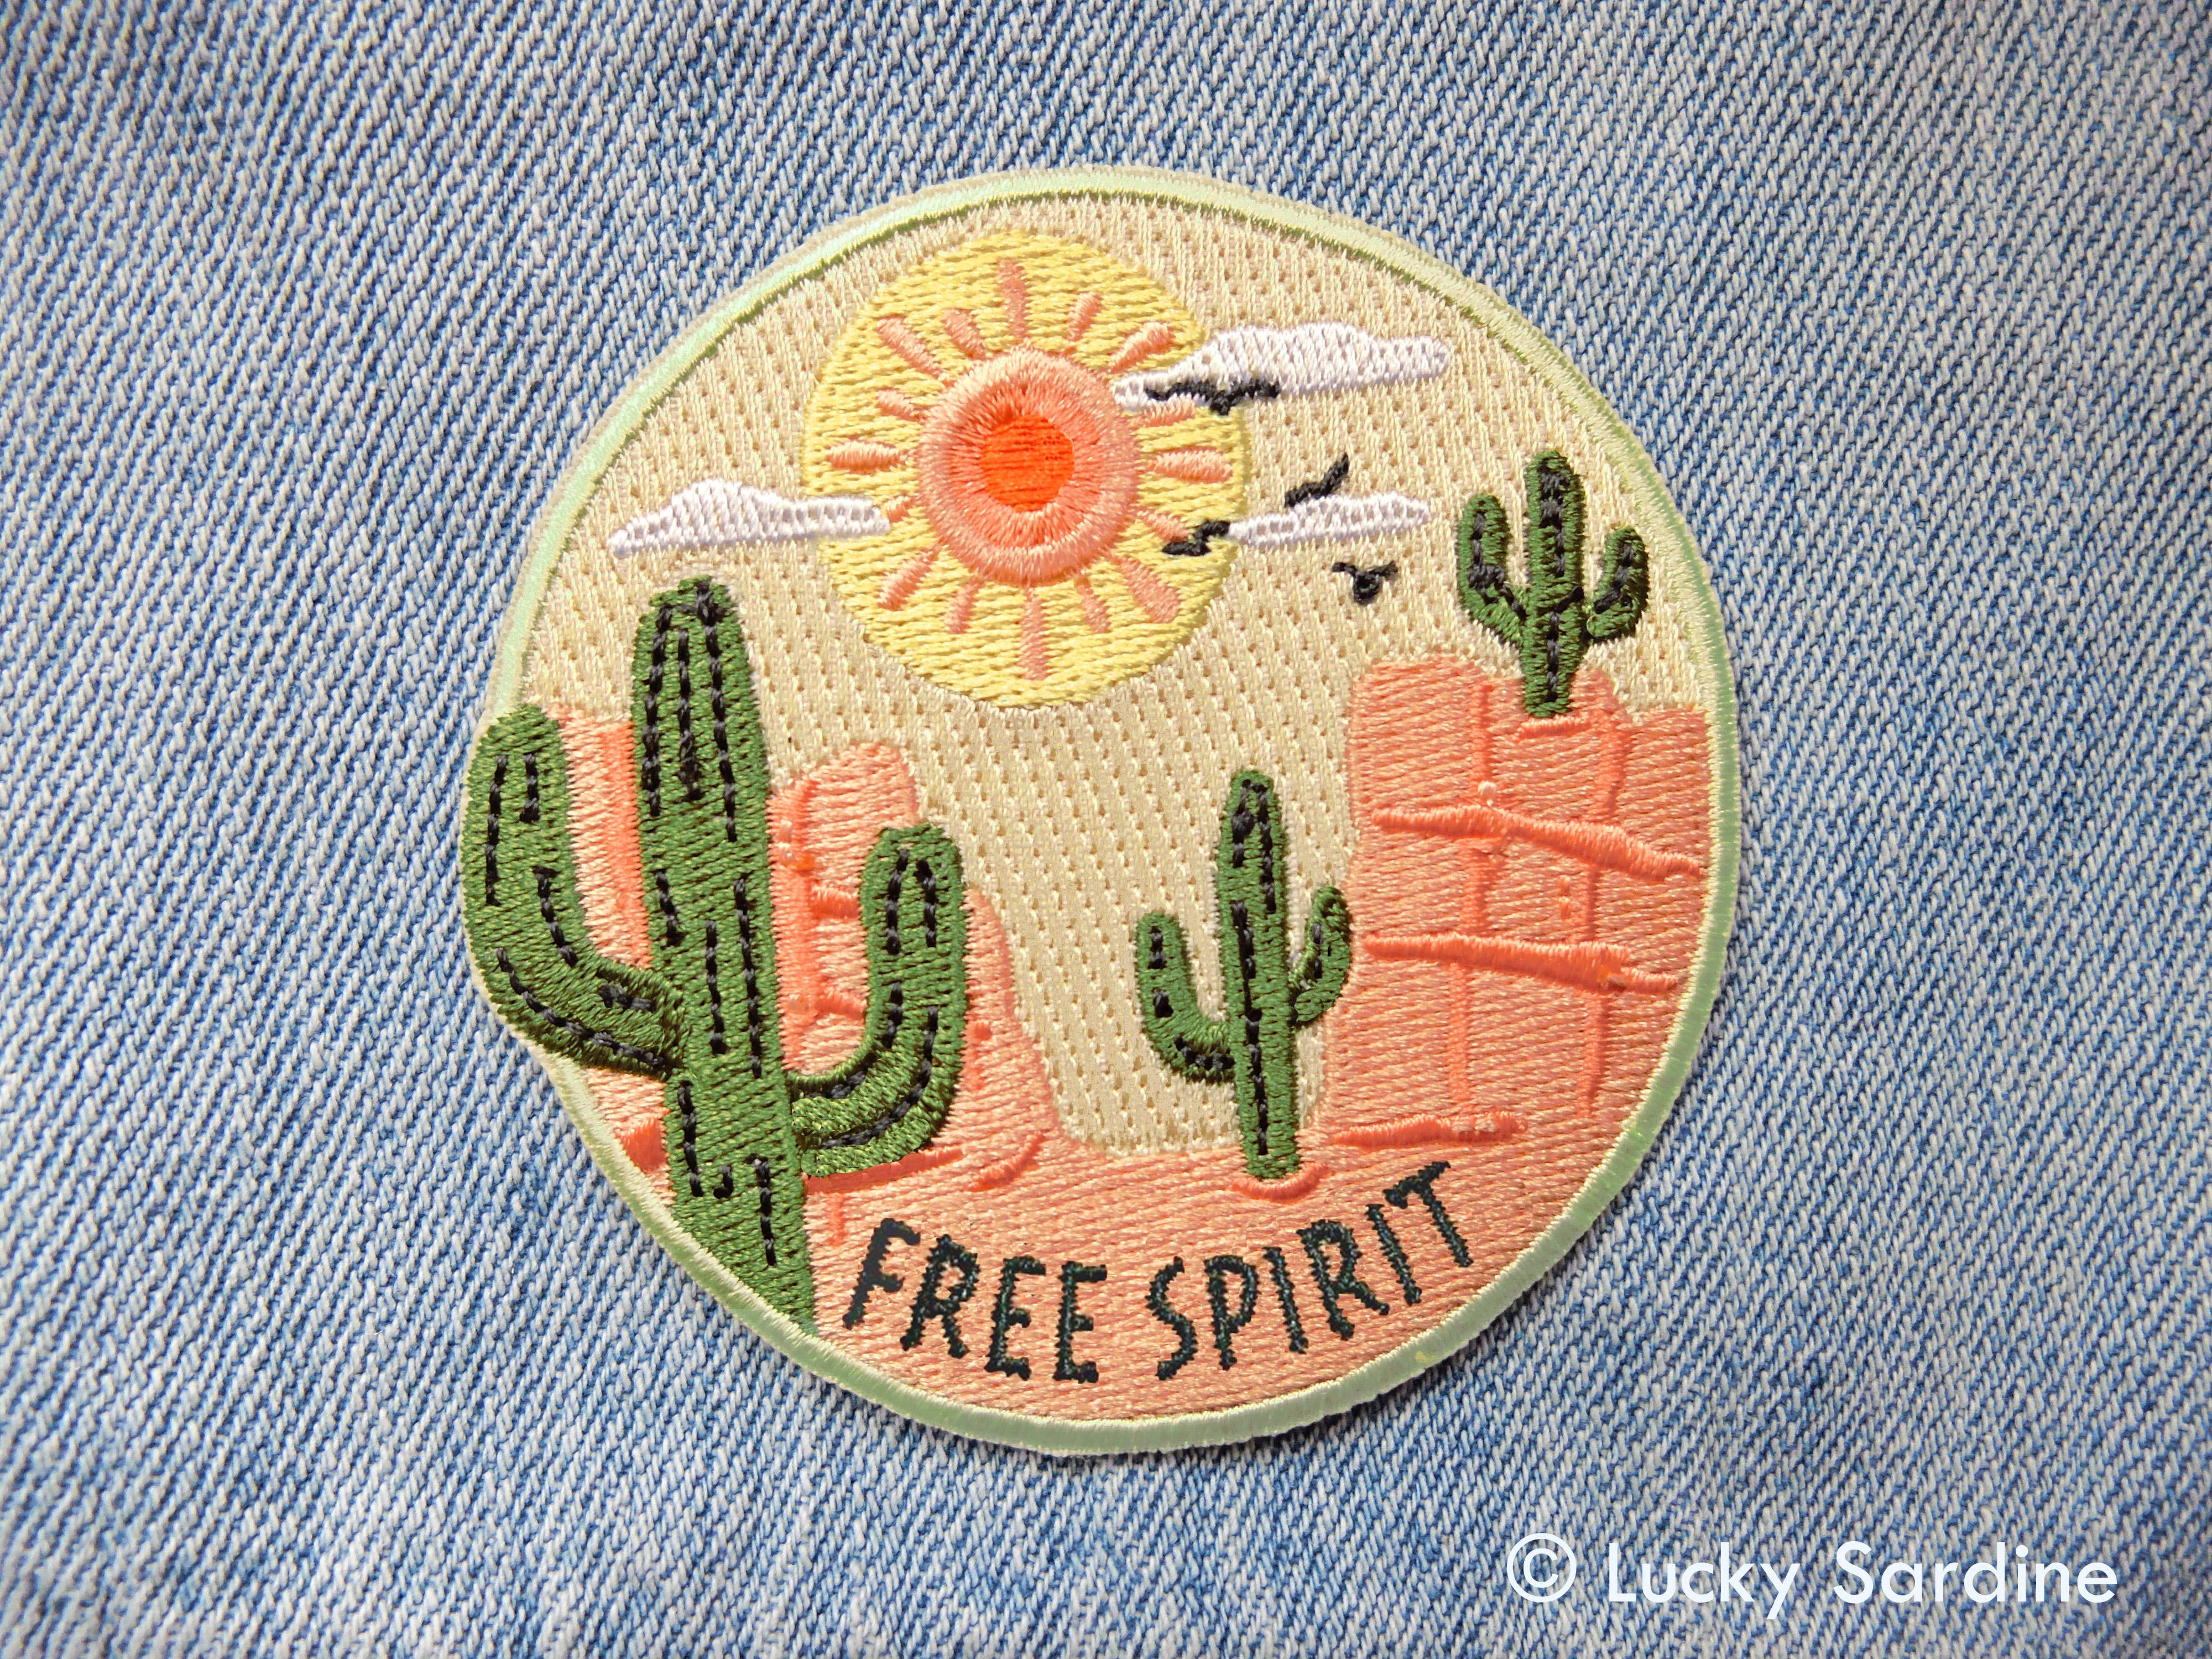 Lucky Sardine - FREE SPIRIT, Desert Embroidered Patch